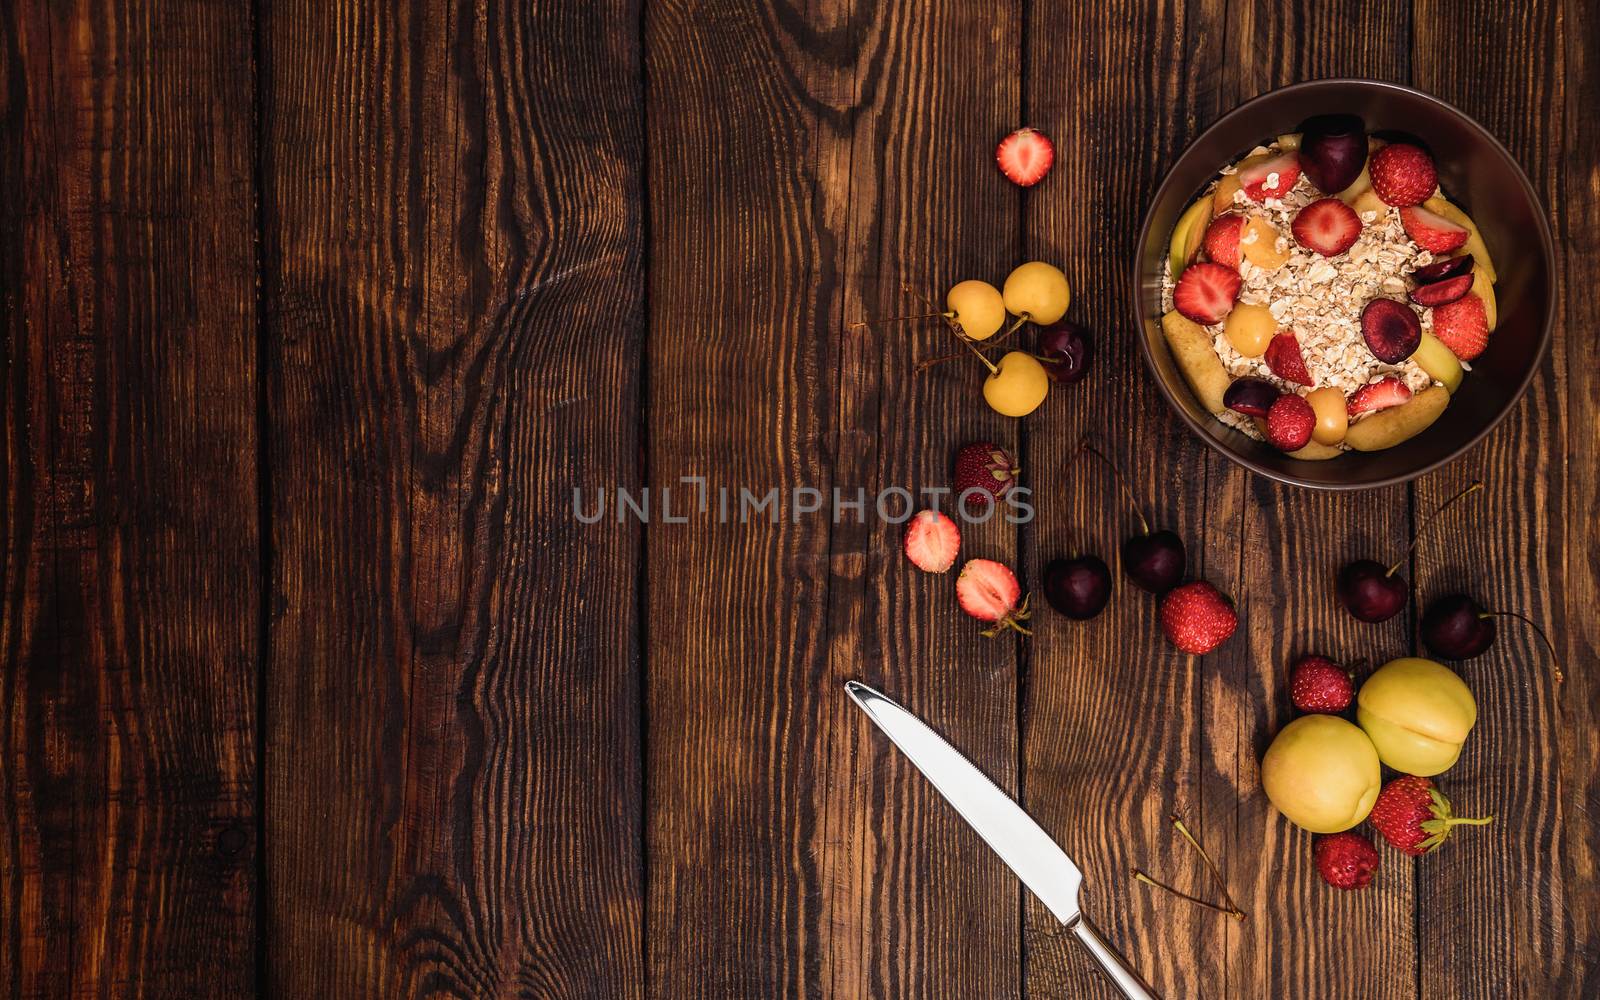 Breakfast table with porridge, fruits and berries by Seva_blsv